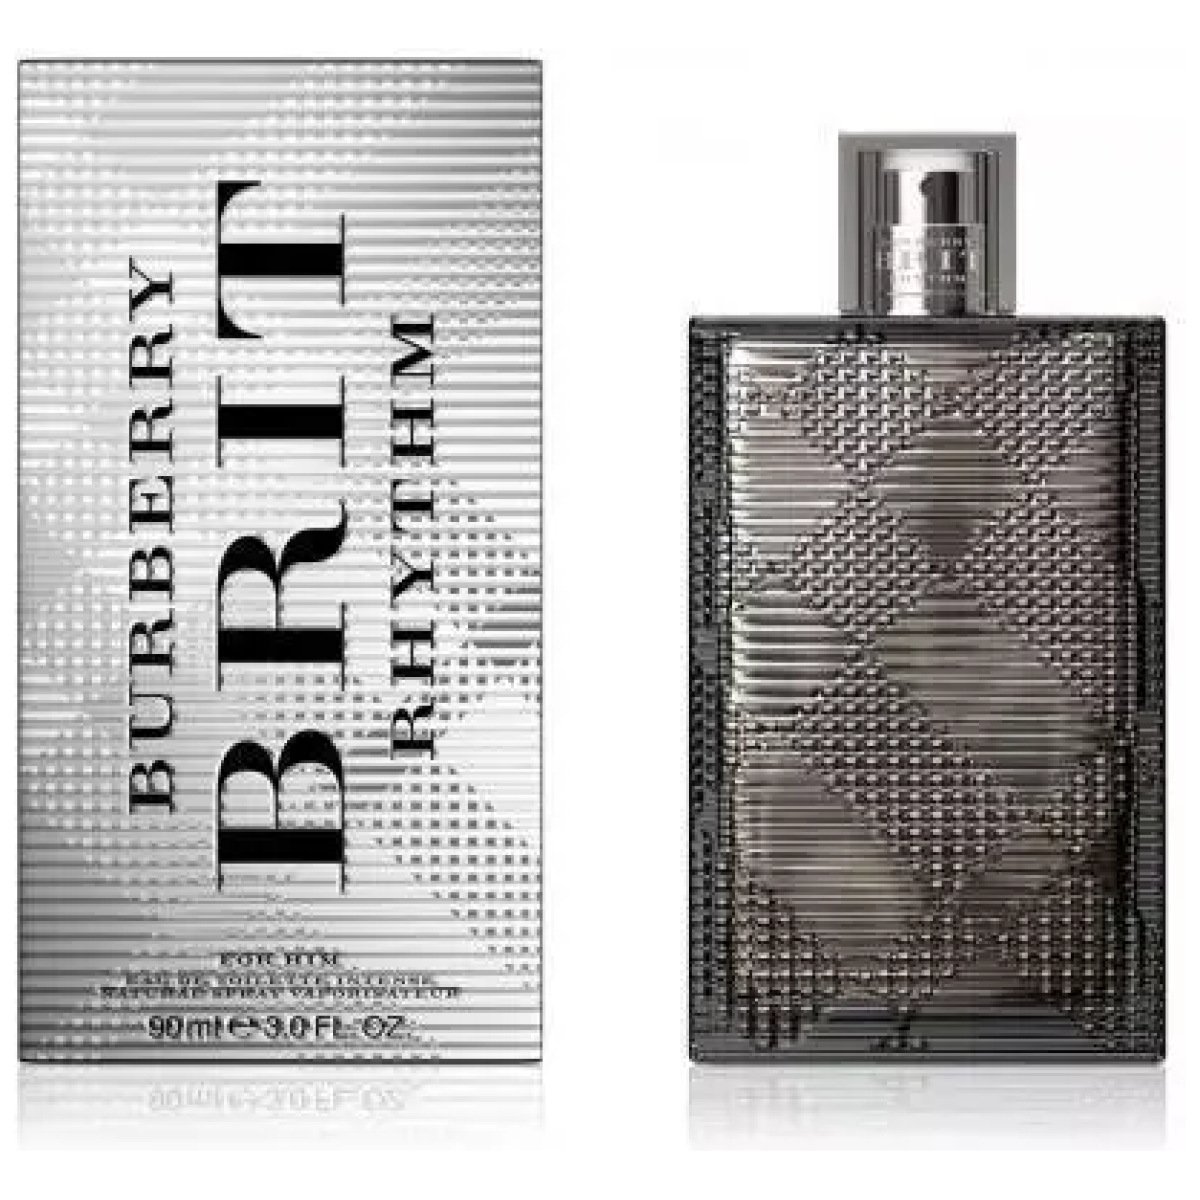 Burberry Brit Rhythm Intense EDT Perfume For Men 90ml